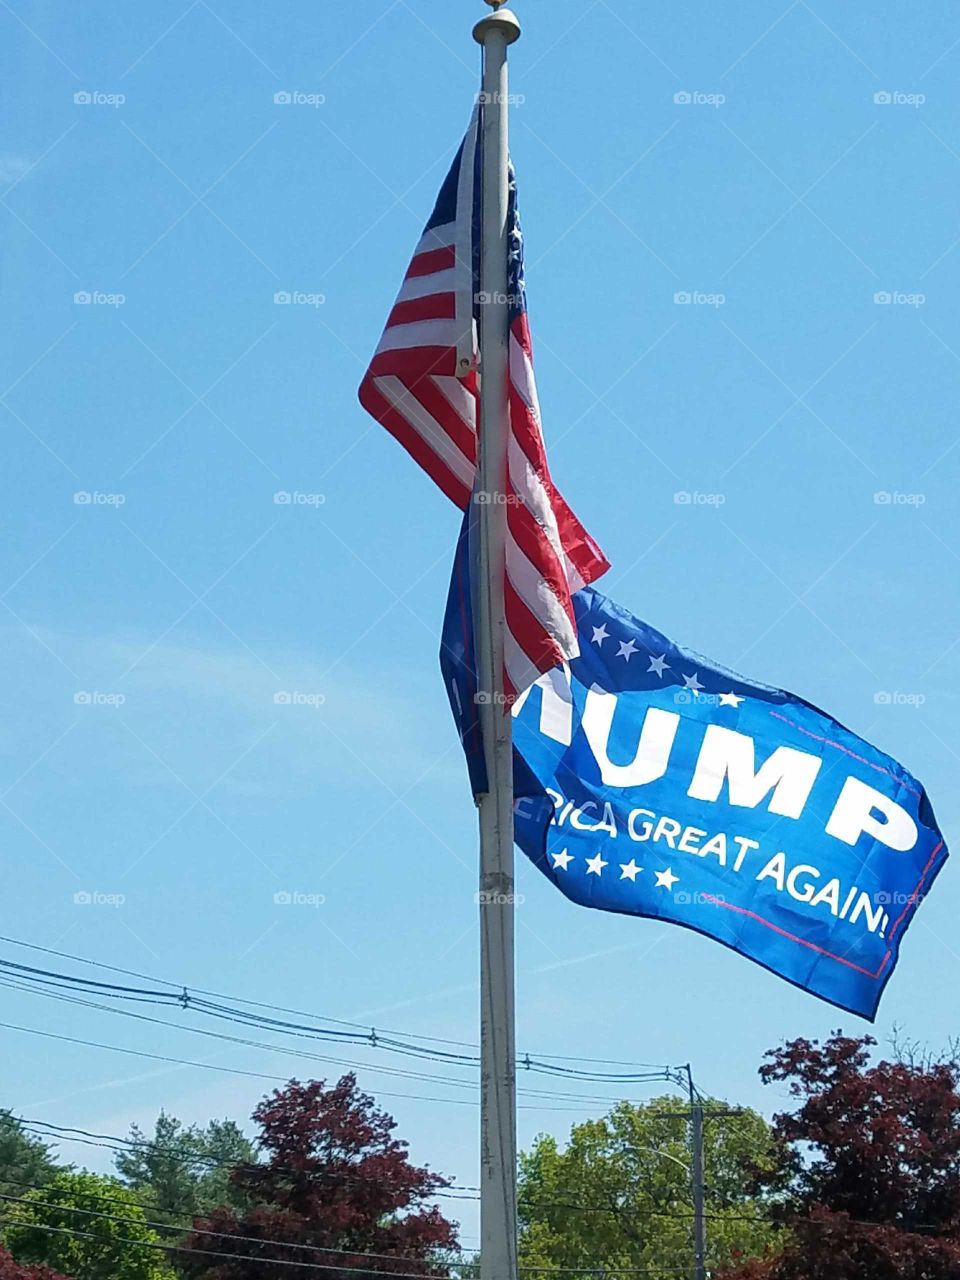 Trump flag & USA🇺🇸 flags on flagpole together, blue sky.